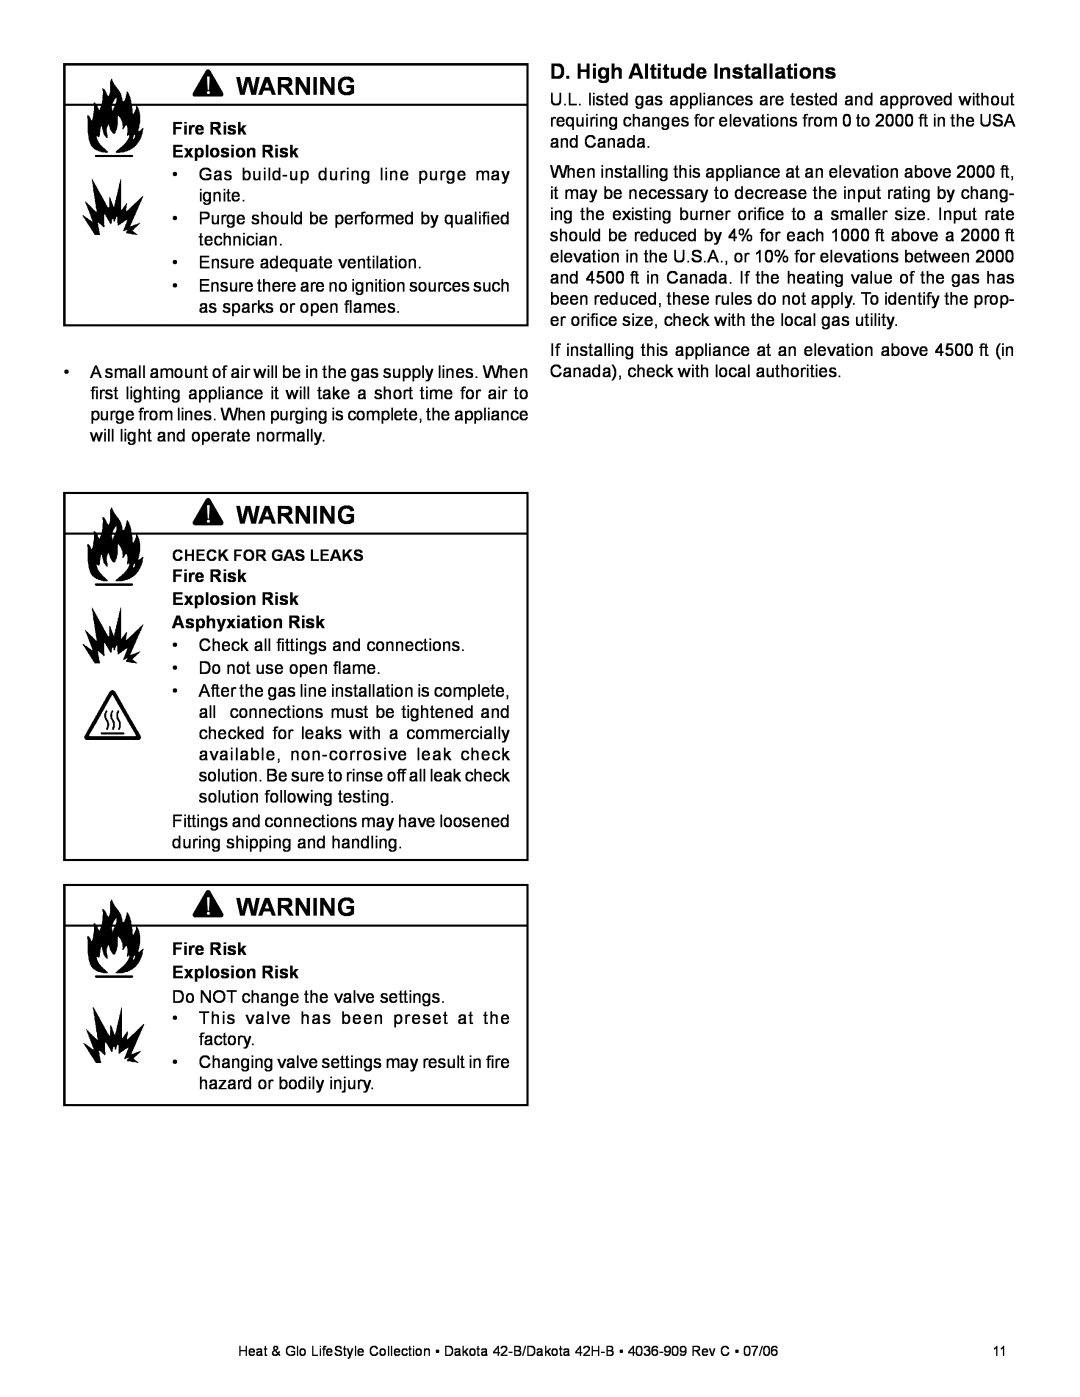 Heat & Glo LifeStyle Dakota 42H-B, Heat & Glo Gas Appliance D. High Altitude Installations, Fire Risk Explosion Risk 